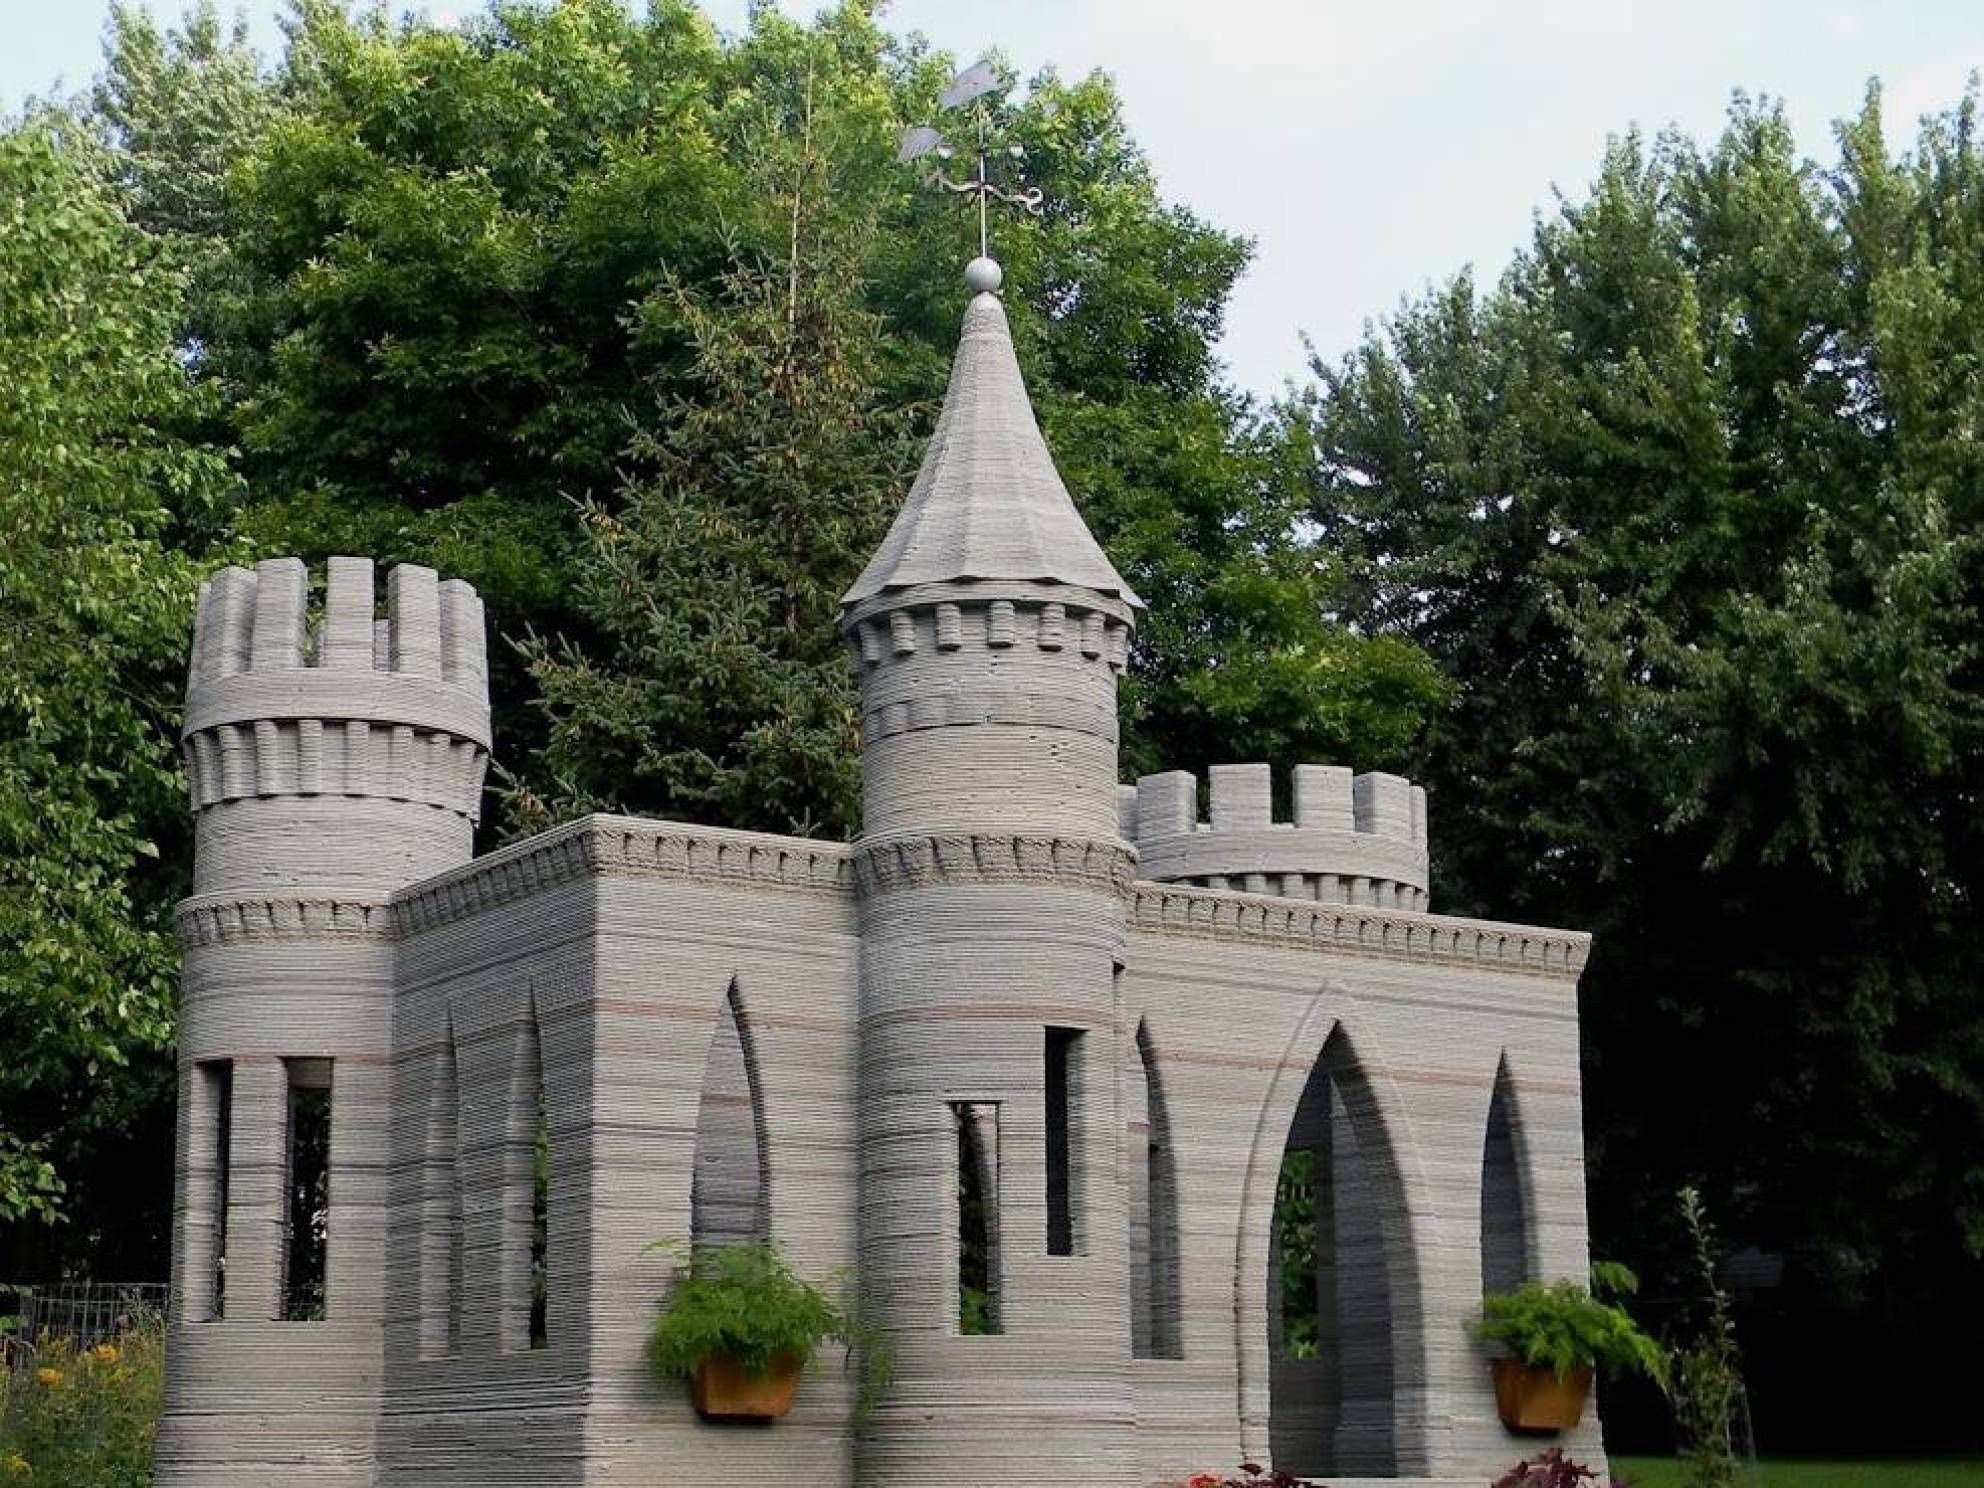 children's castle playhouse